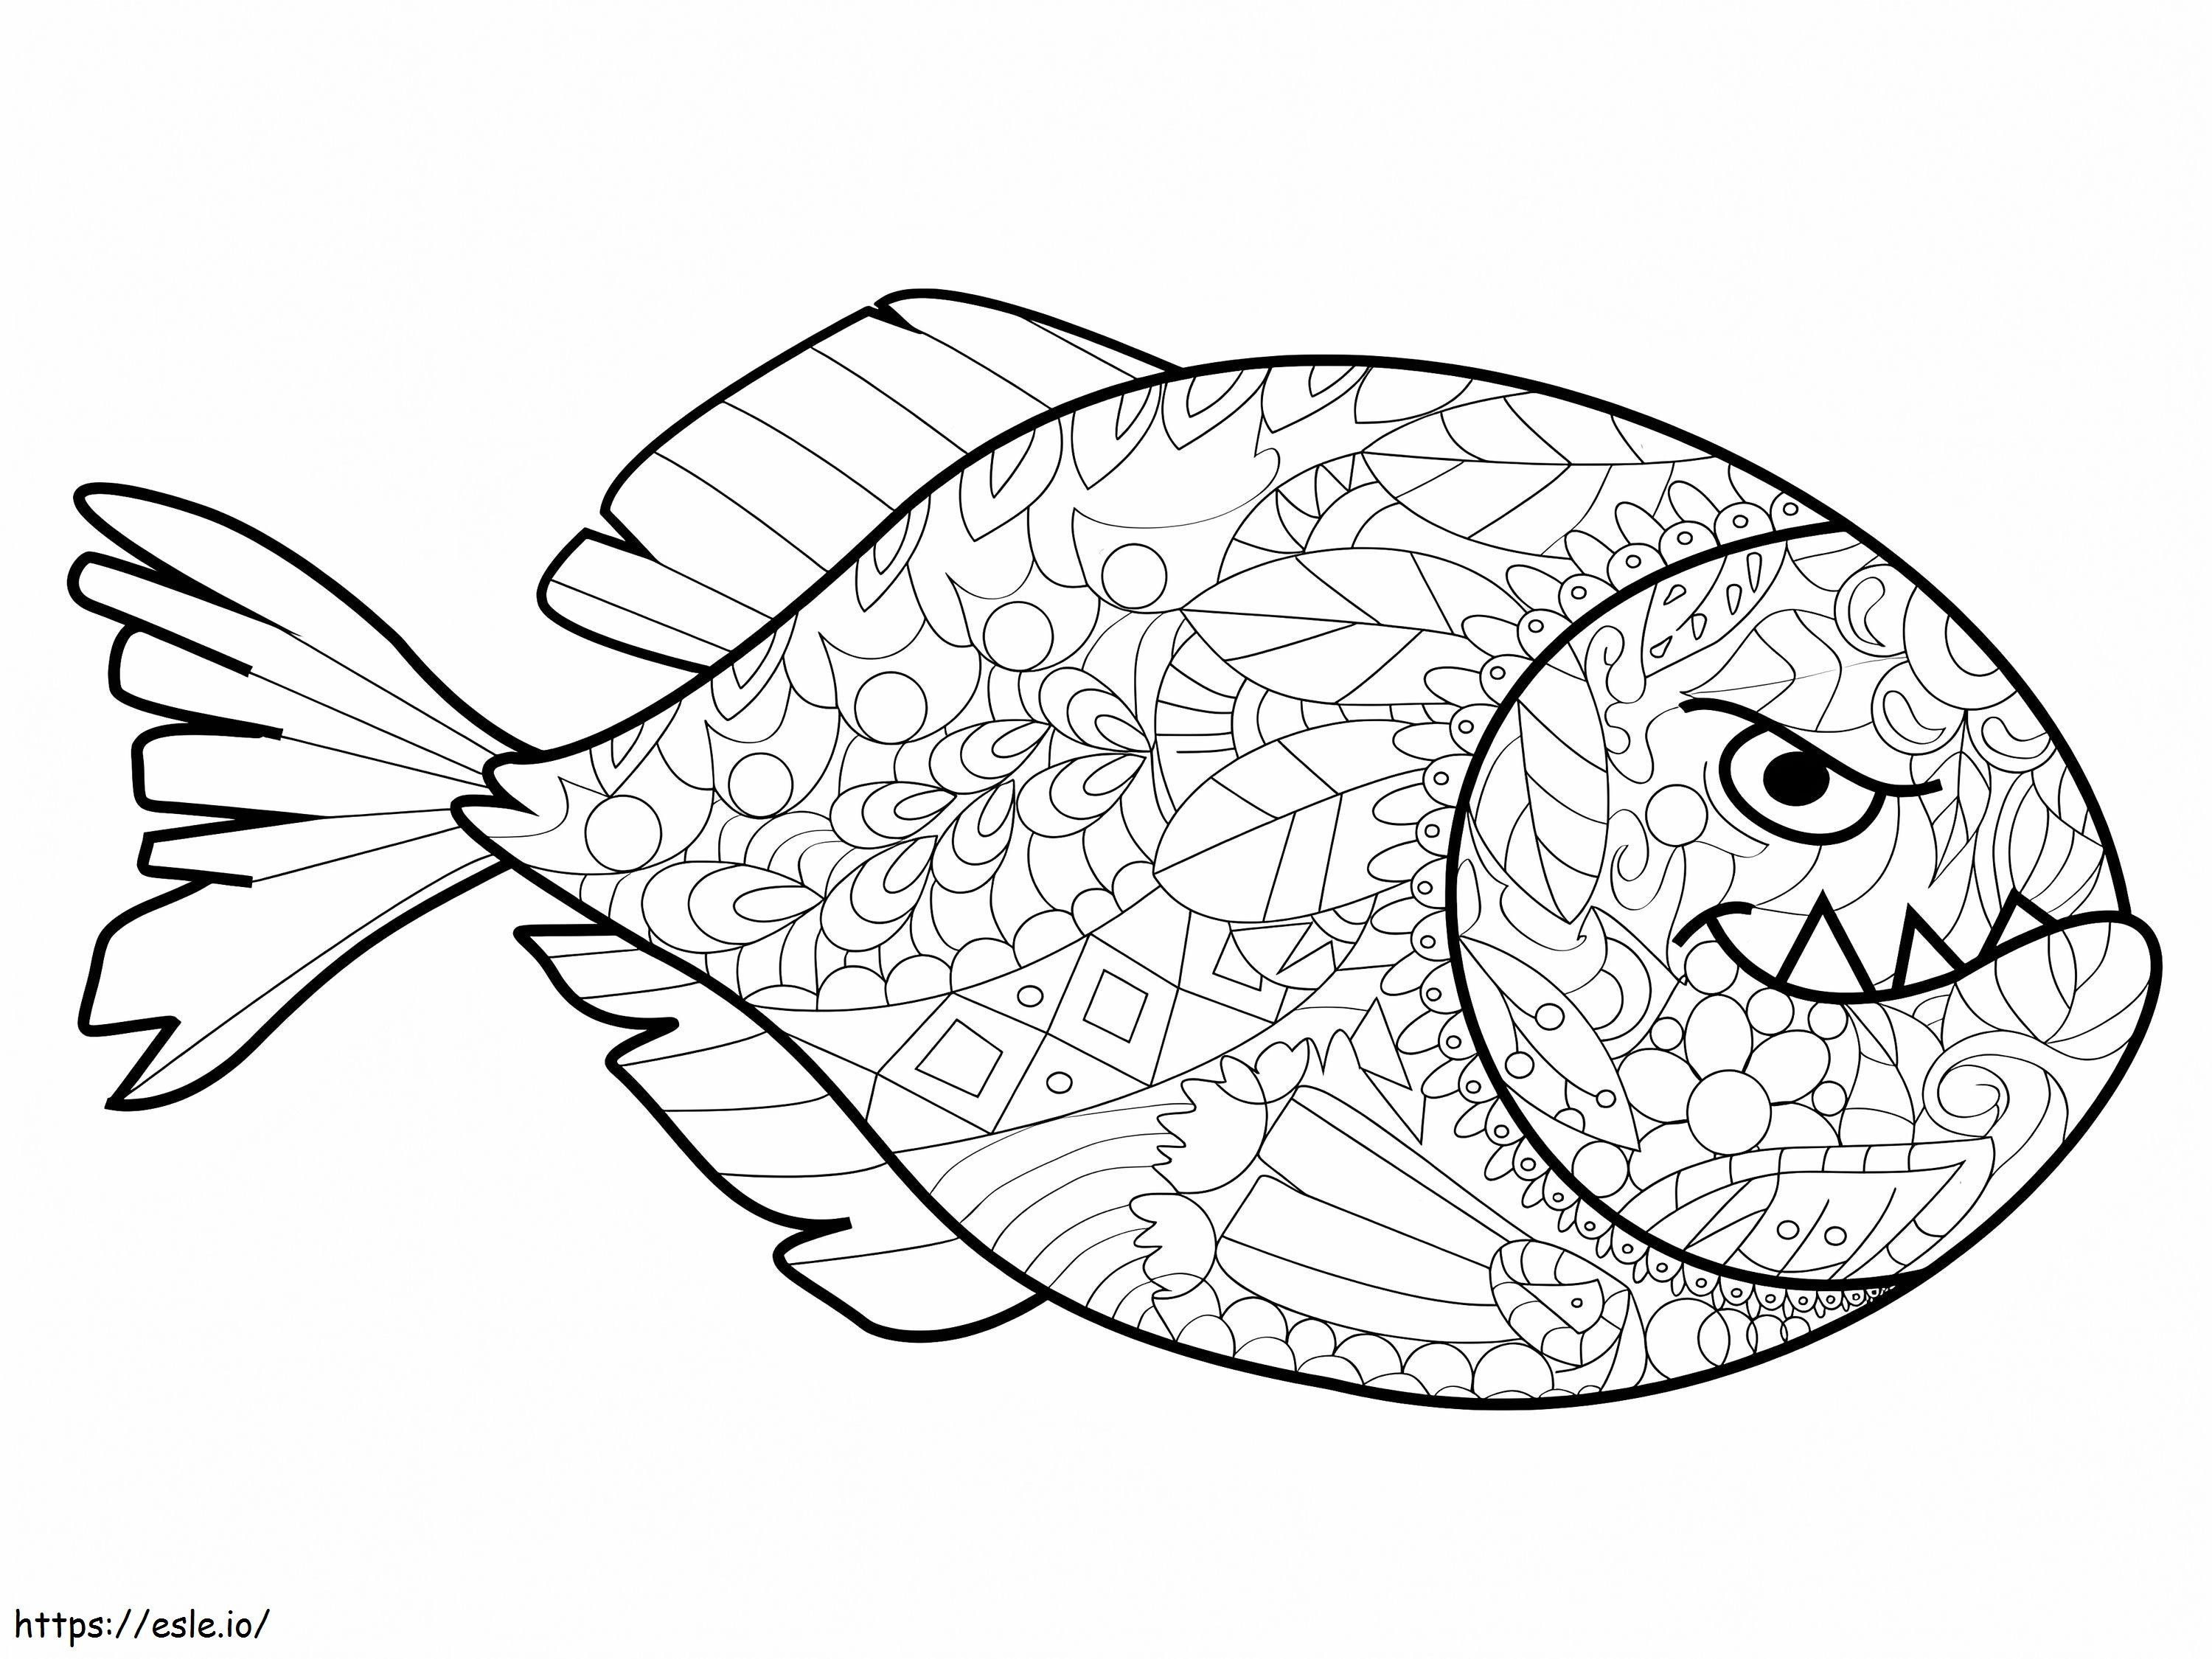 Zentangle Piranha coloring page